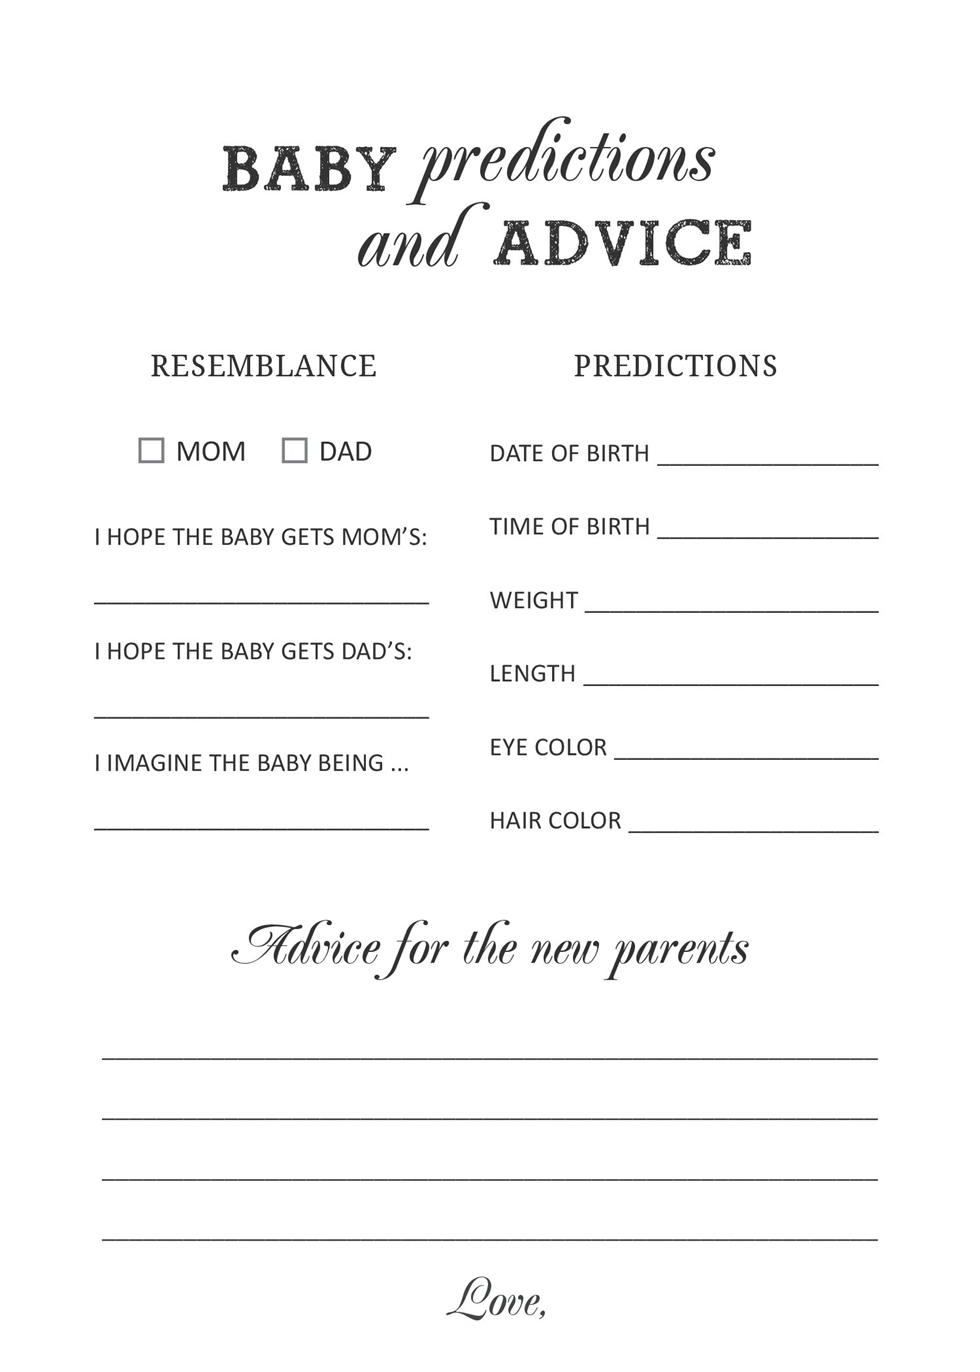 Free Printable Baby Prediction And Advice Cards Baby Shower Games - Free Printable Baby Advice Cards